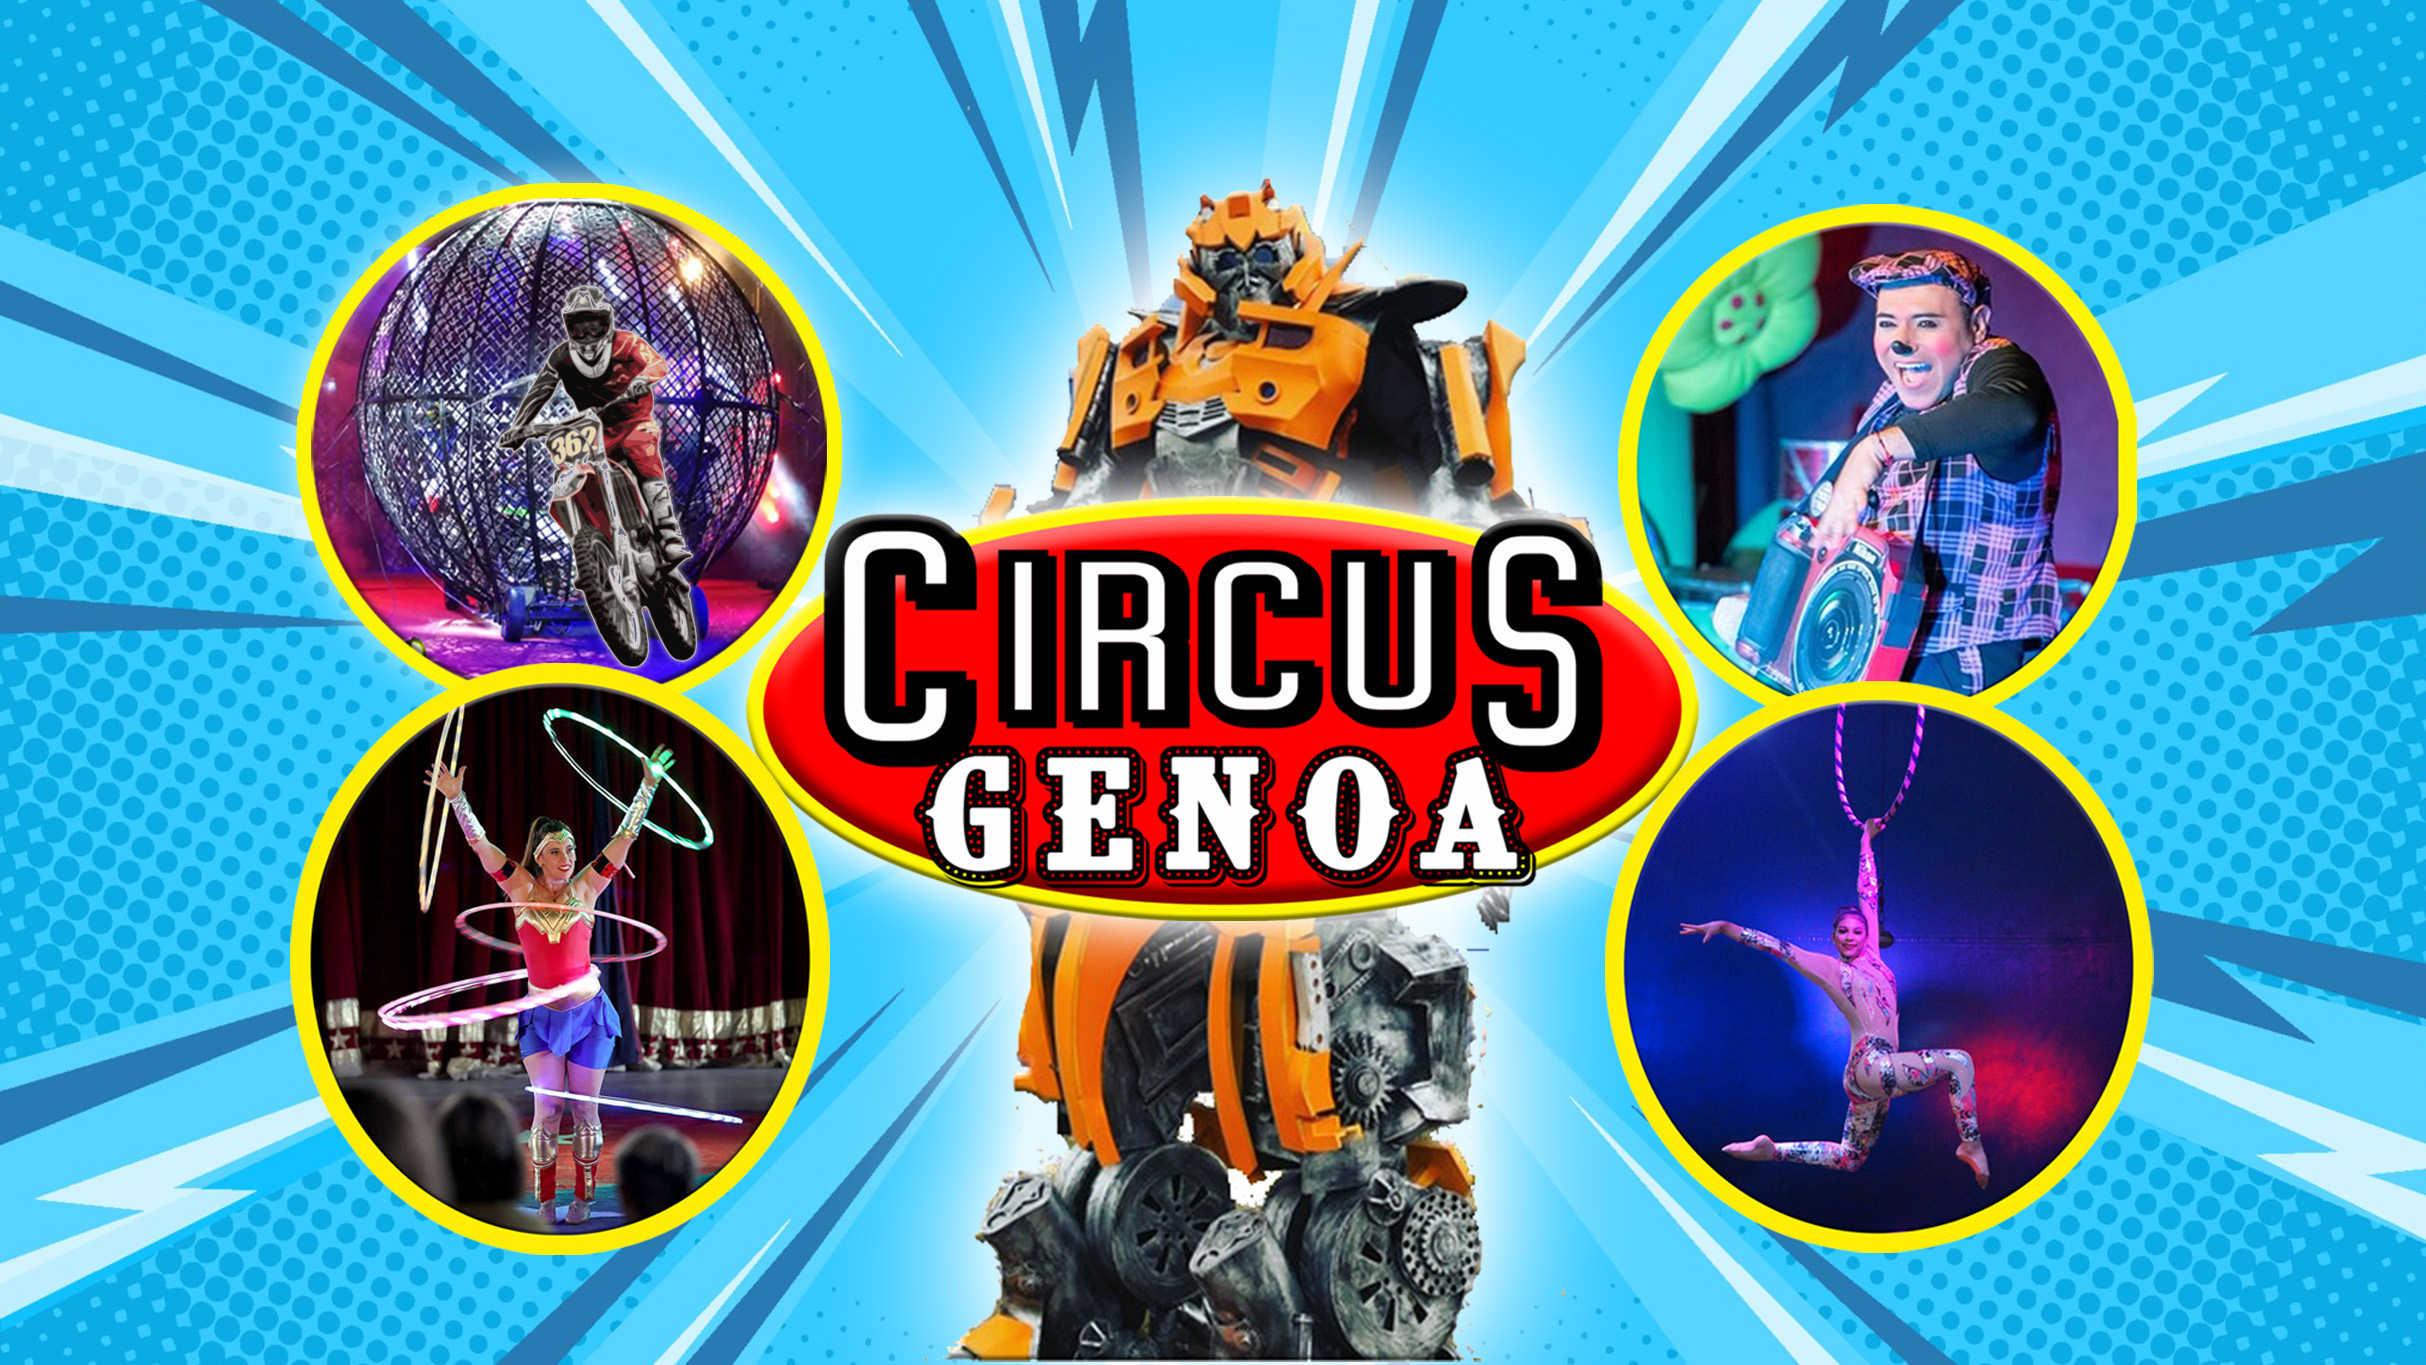 Circus Genoa | MEAFORD, ONTARIO (June 7)